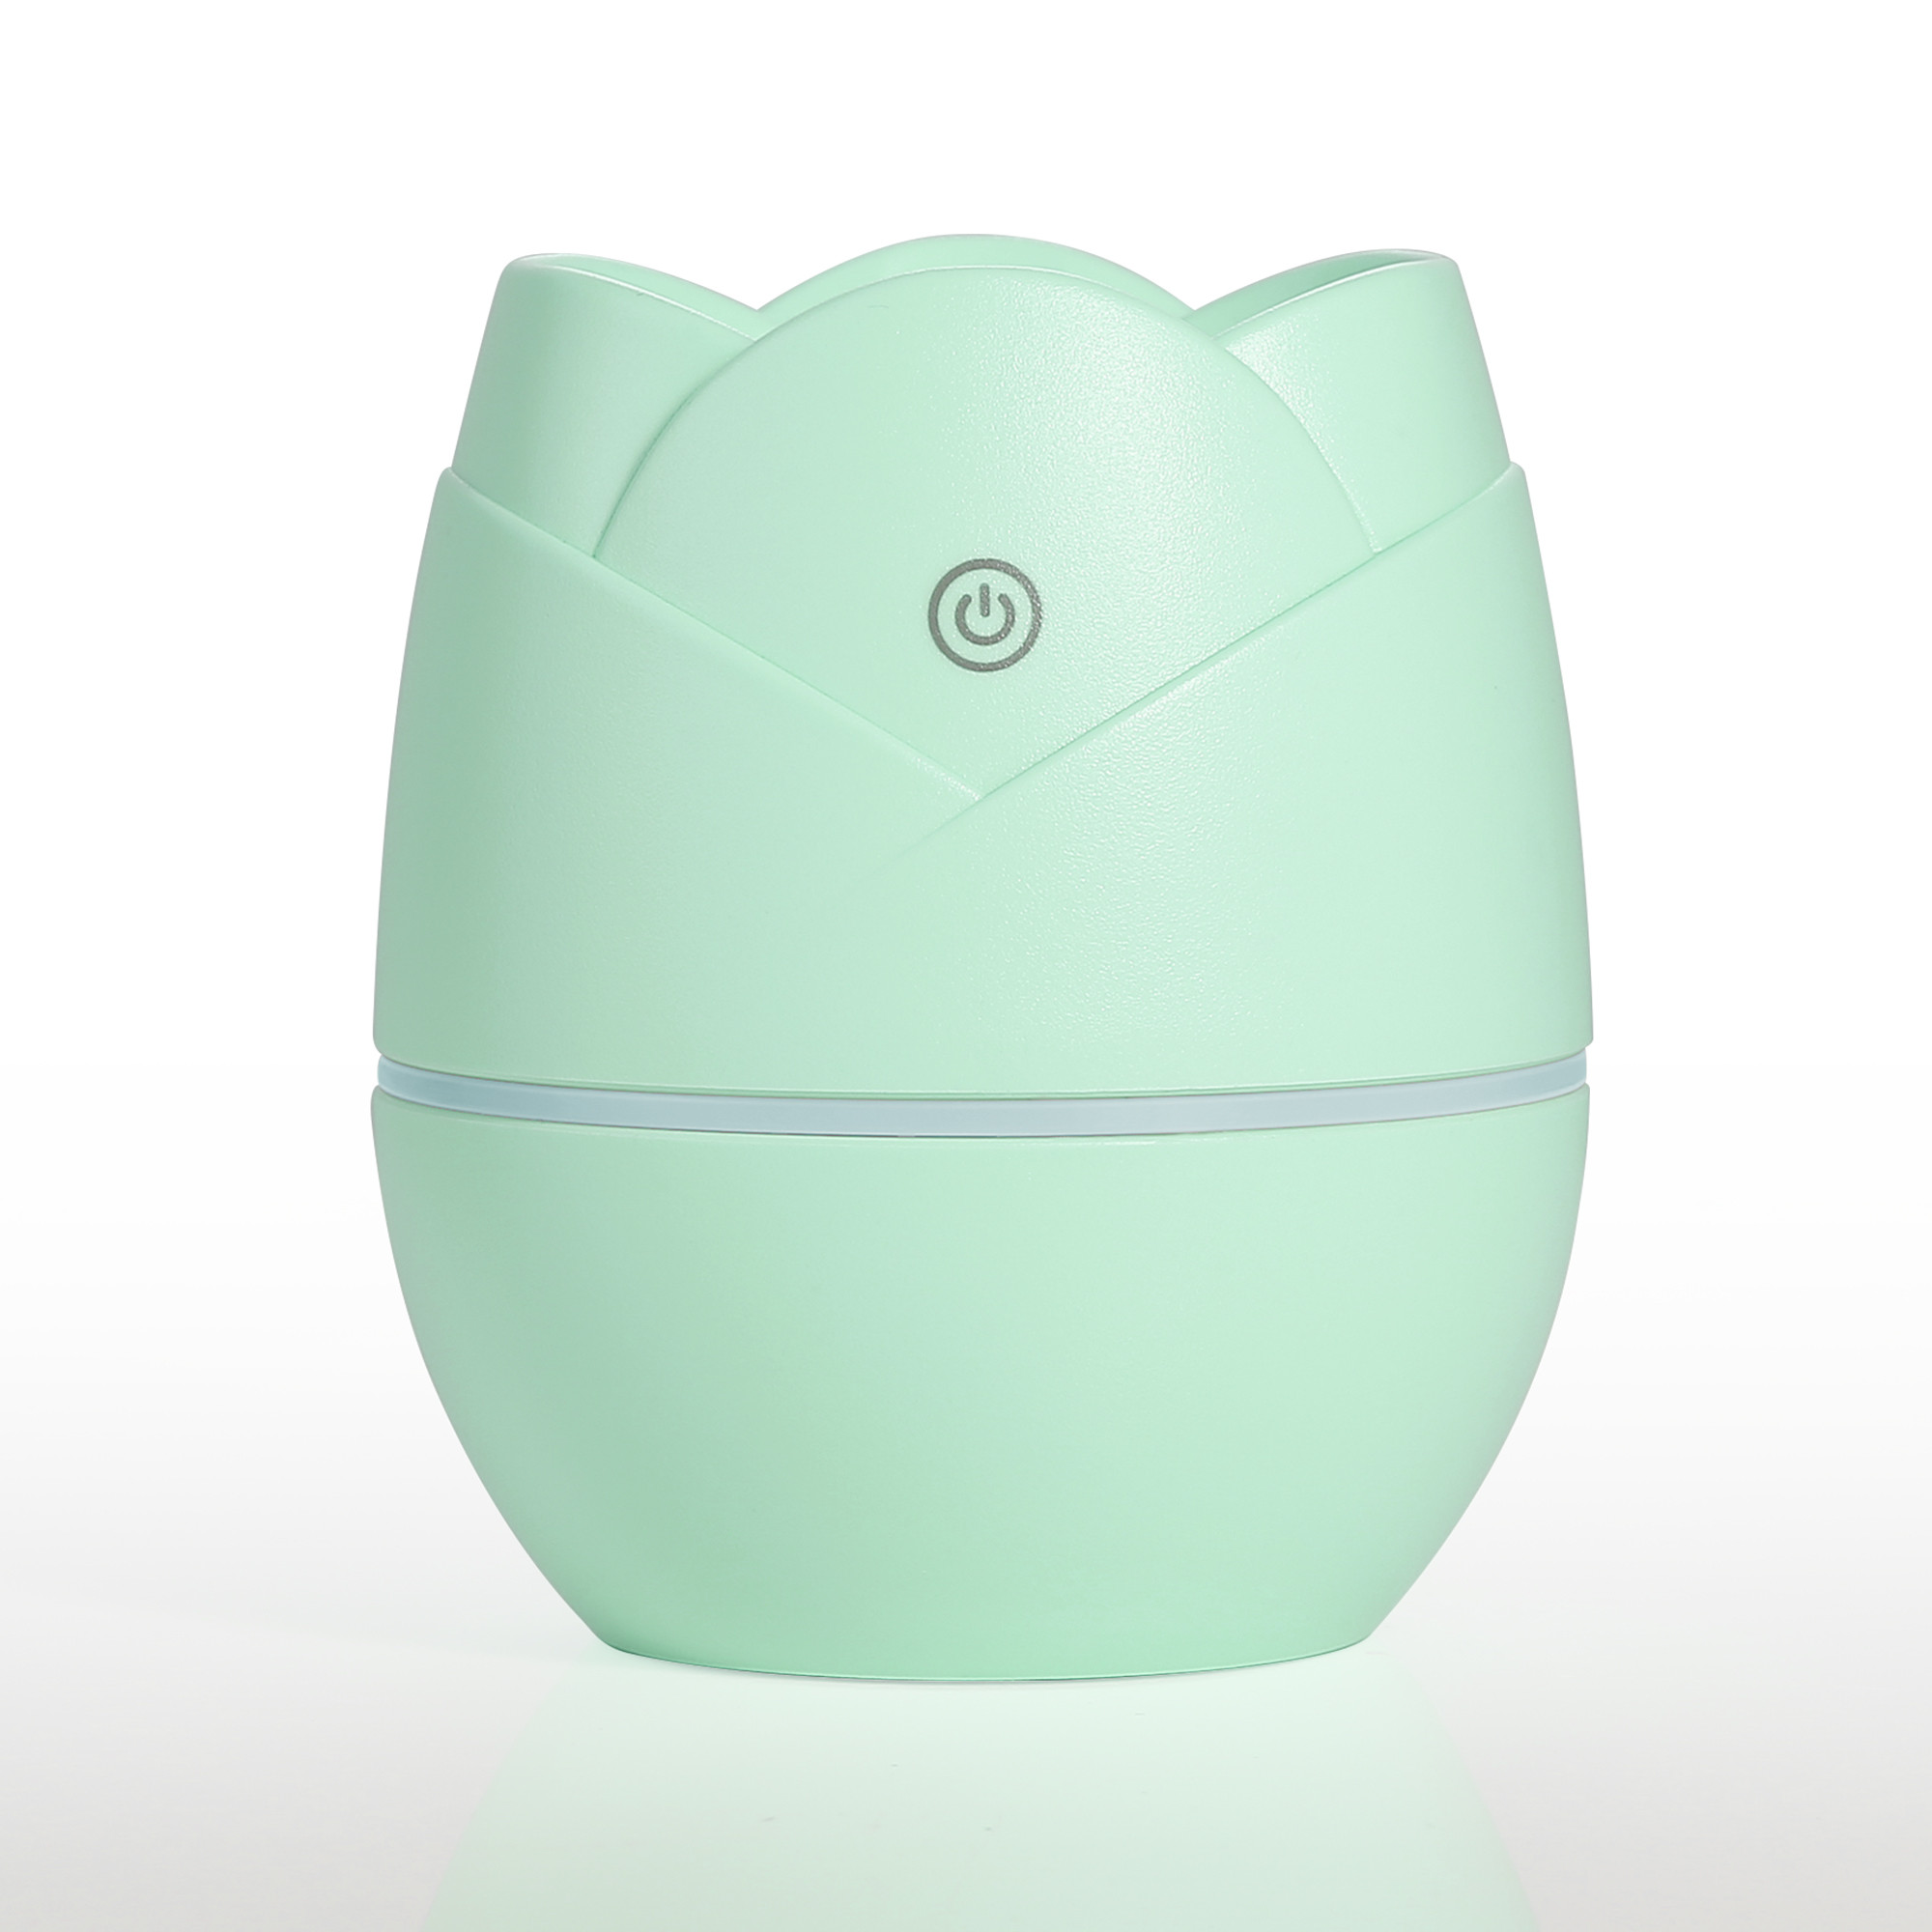 Small Humidifier For Bedroom
 Mini USB Humidifier Cool Mist Humidifier for Bedroom Baby